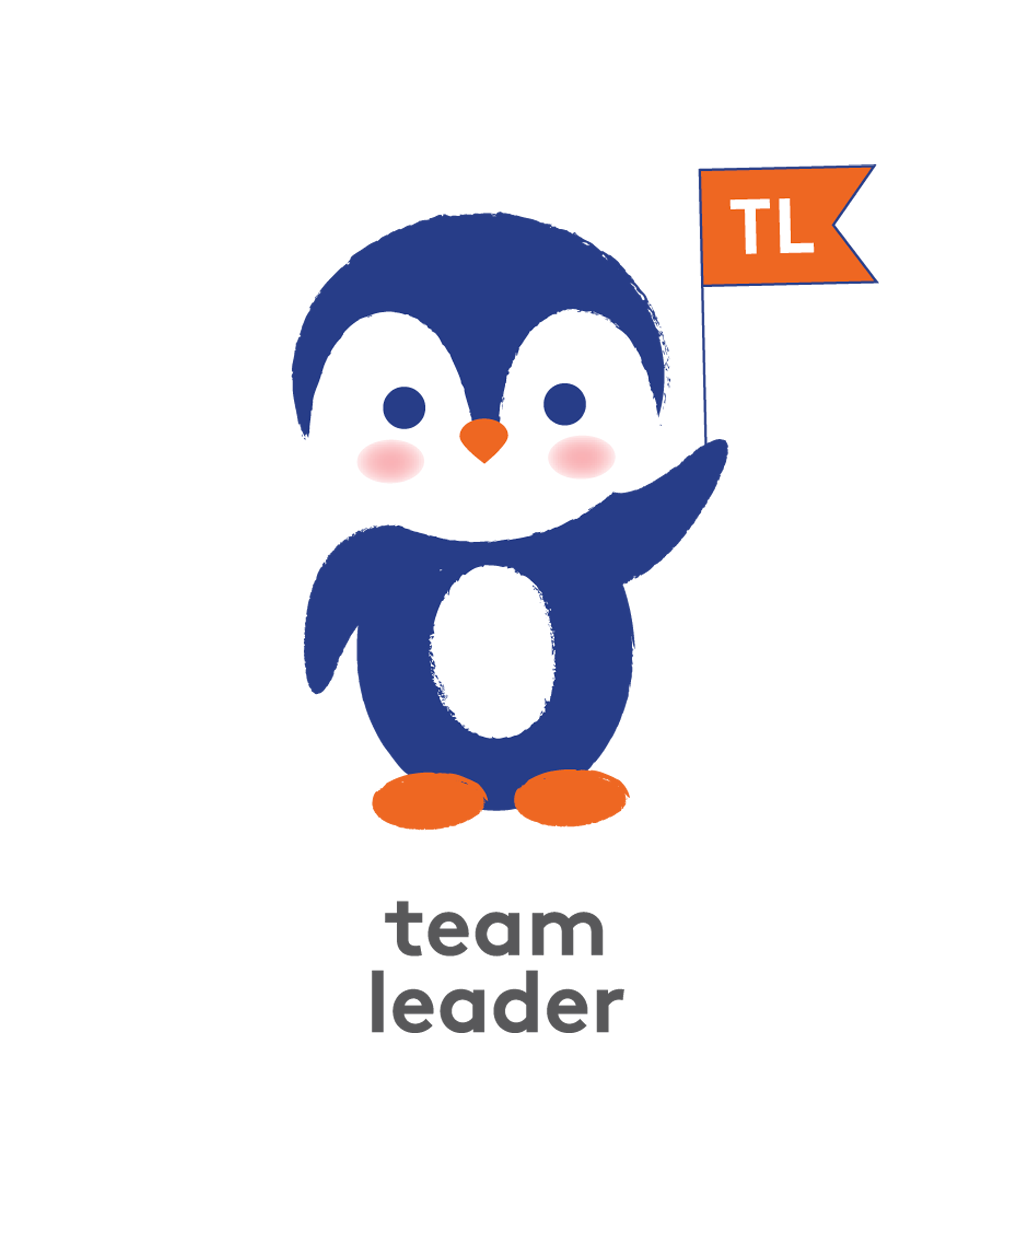 Team Leader